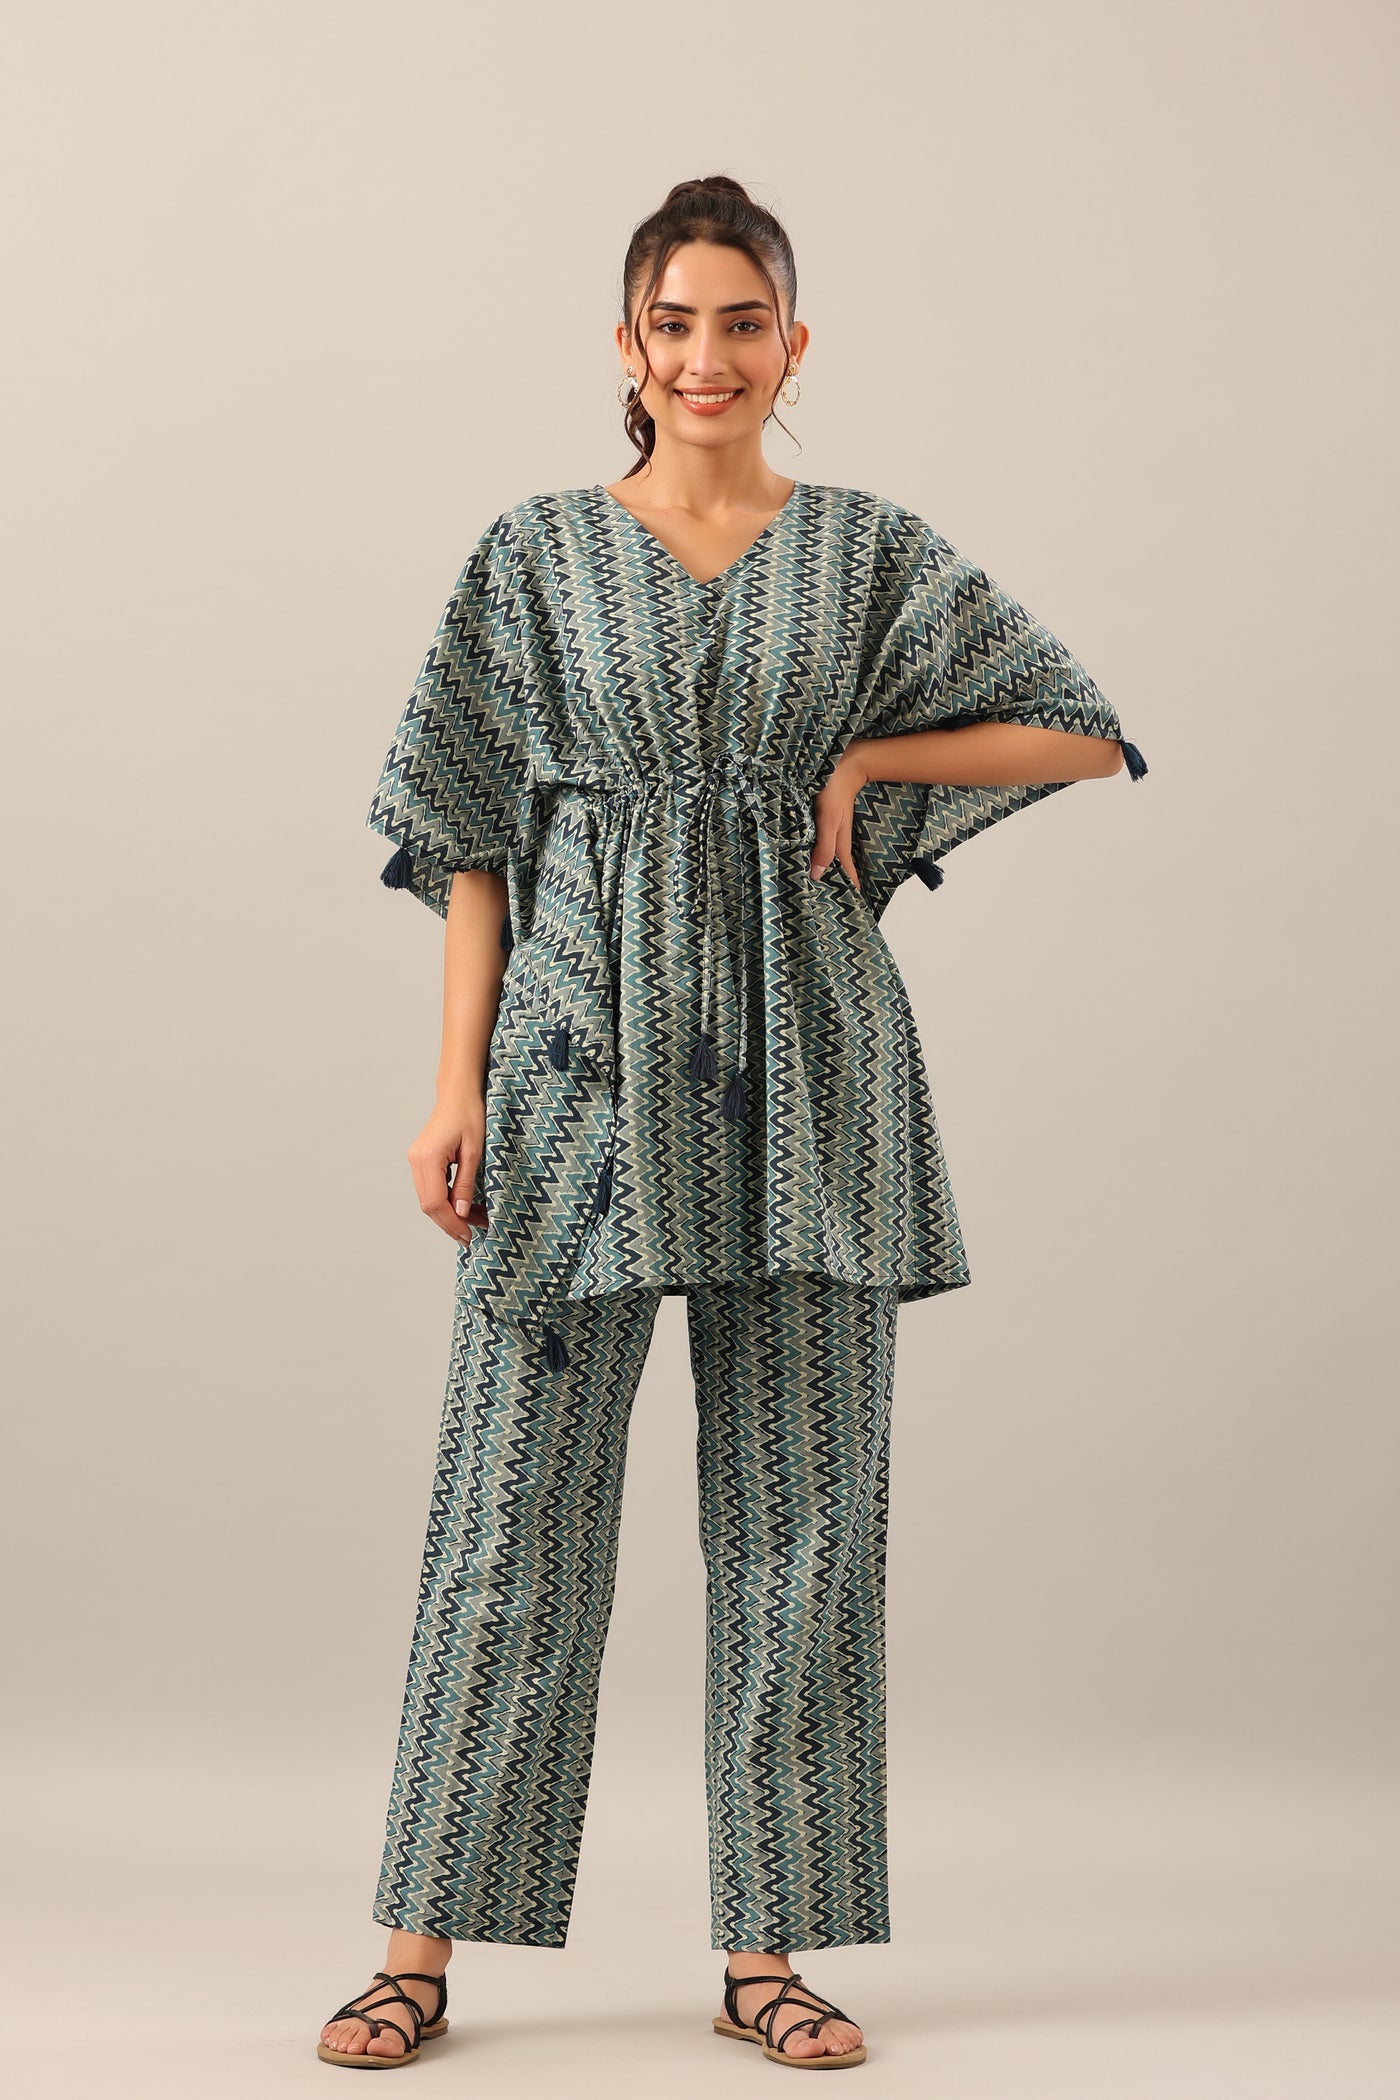 Zigzag on Green cotton Kaftan Pajama Set